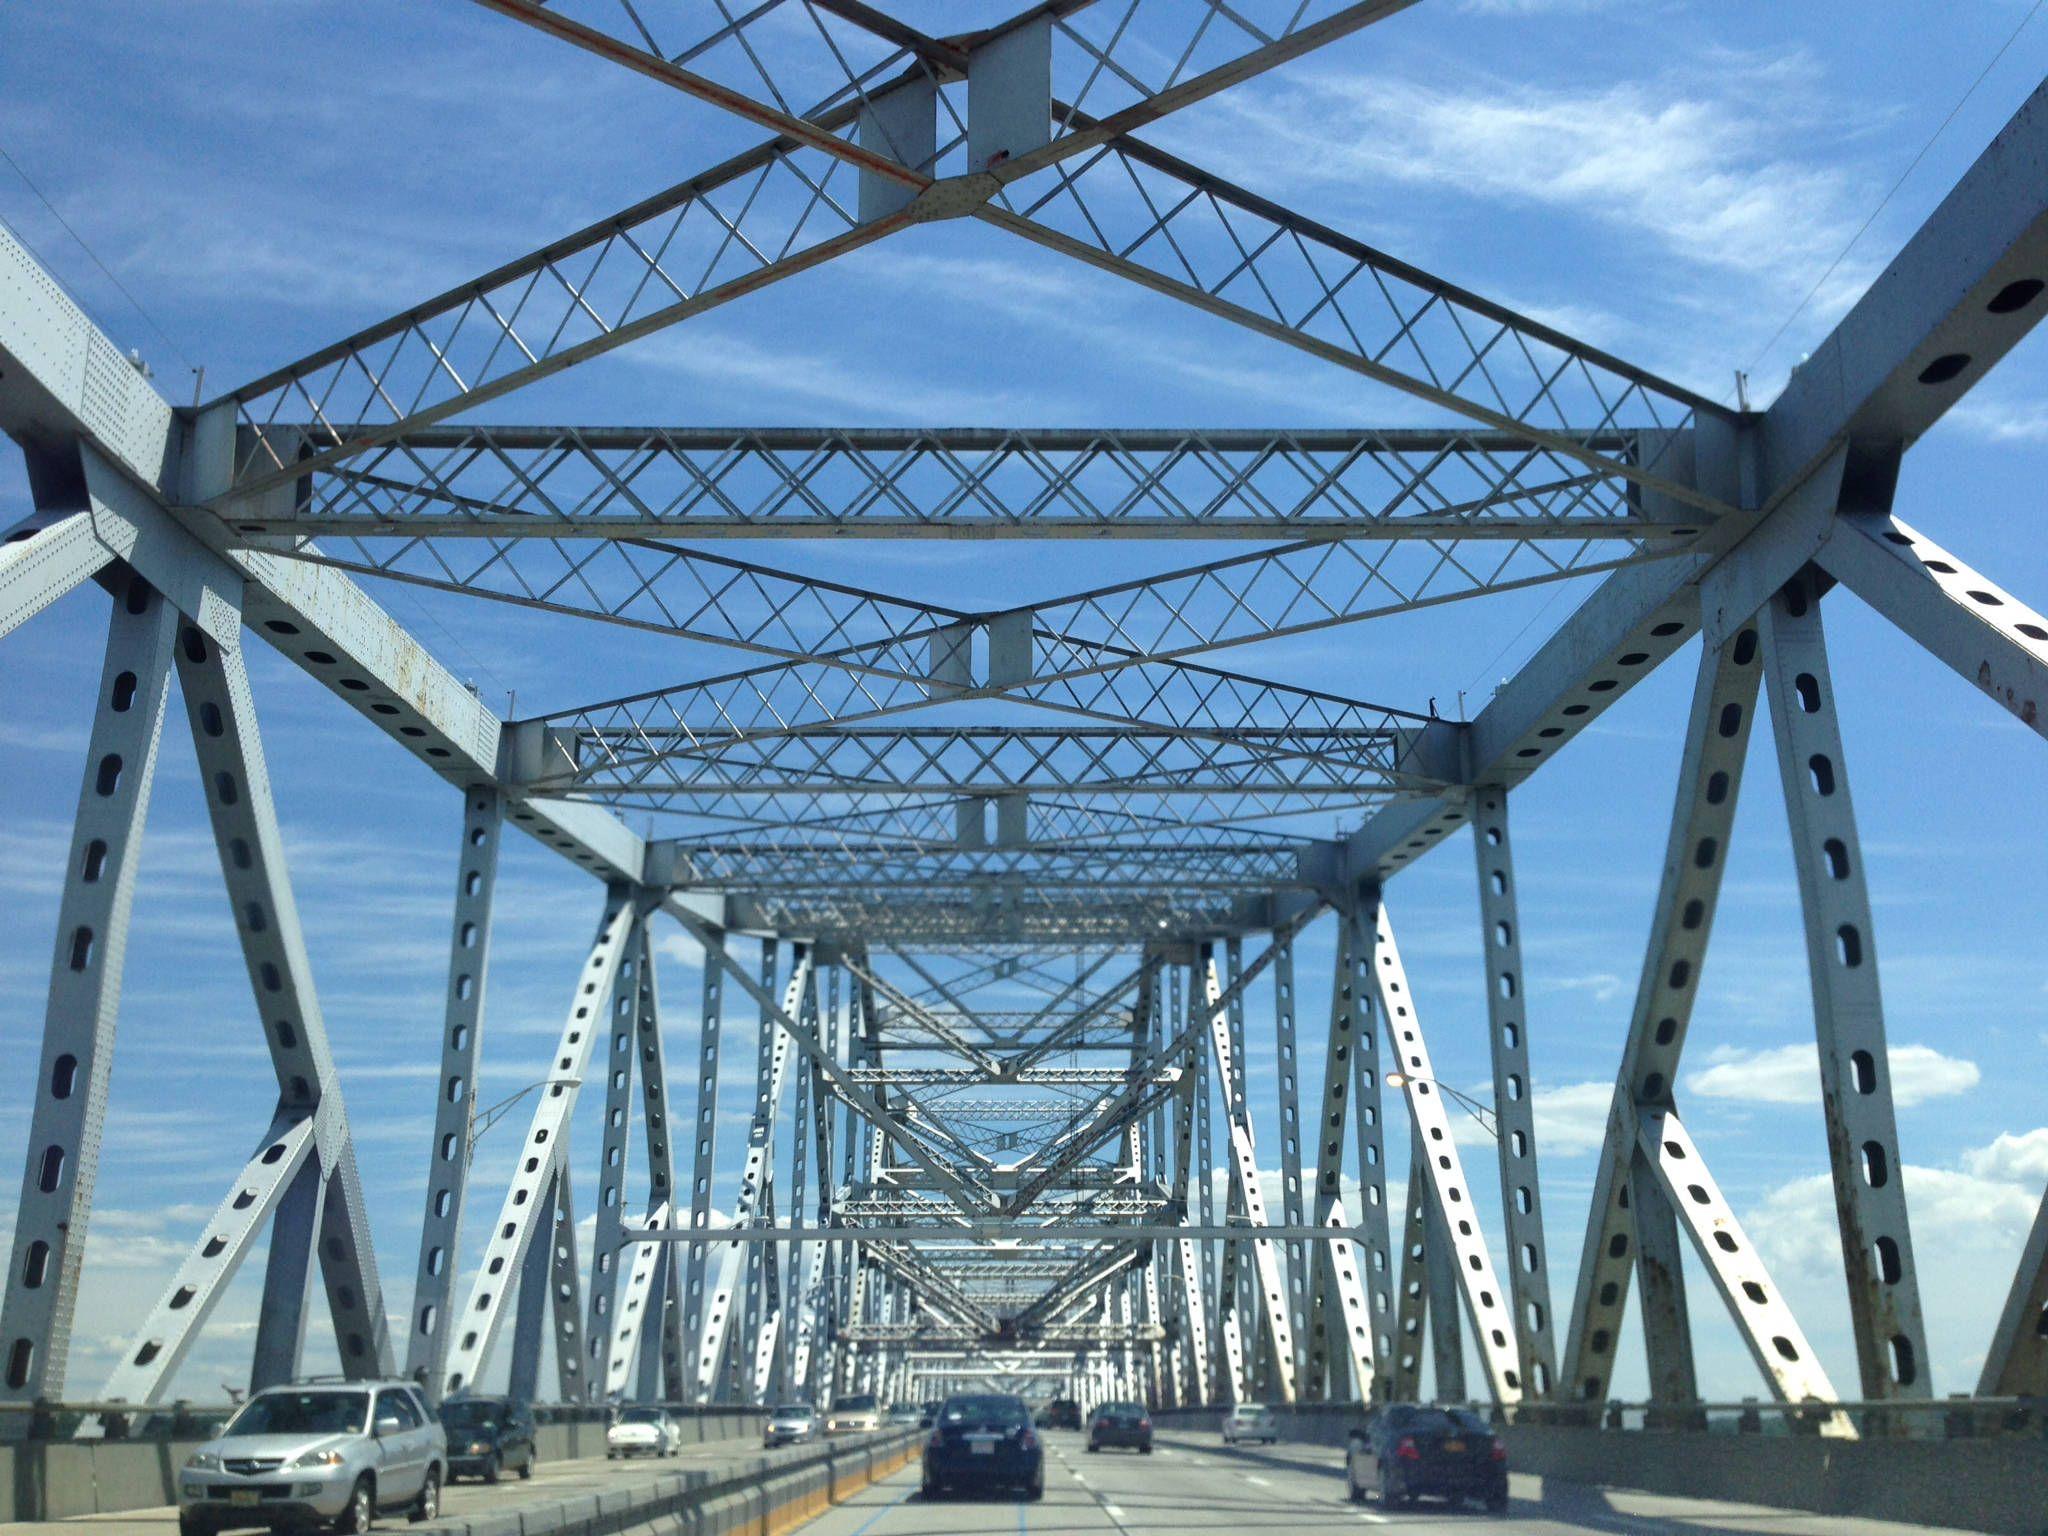 06 17 Tappan Zee Bridge in New York heading toward